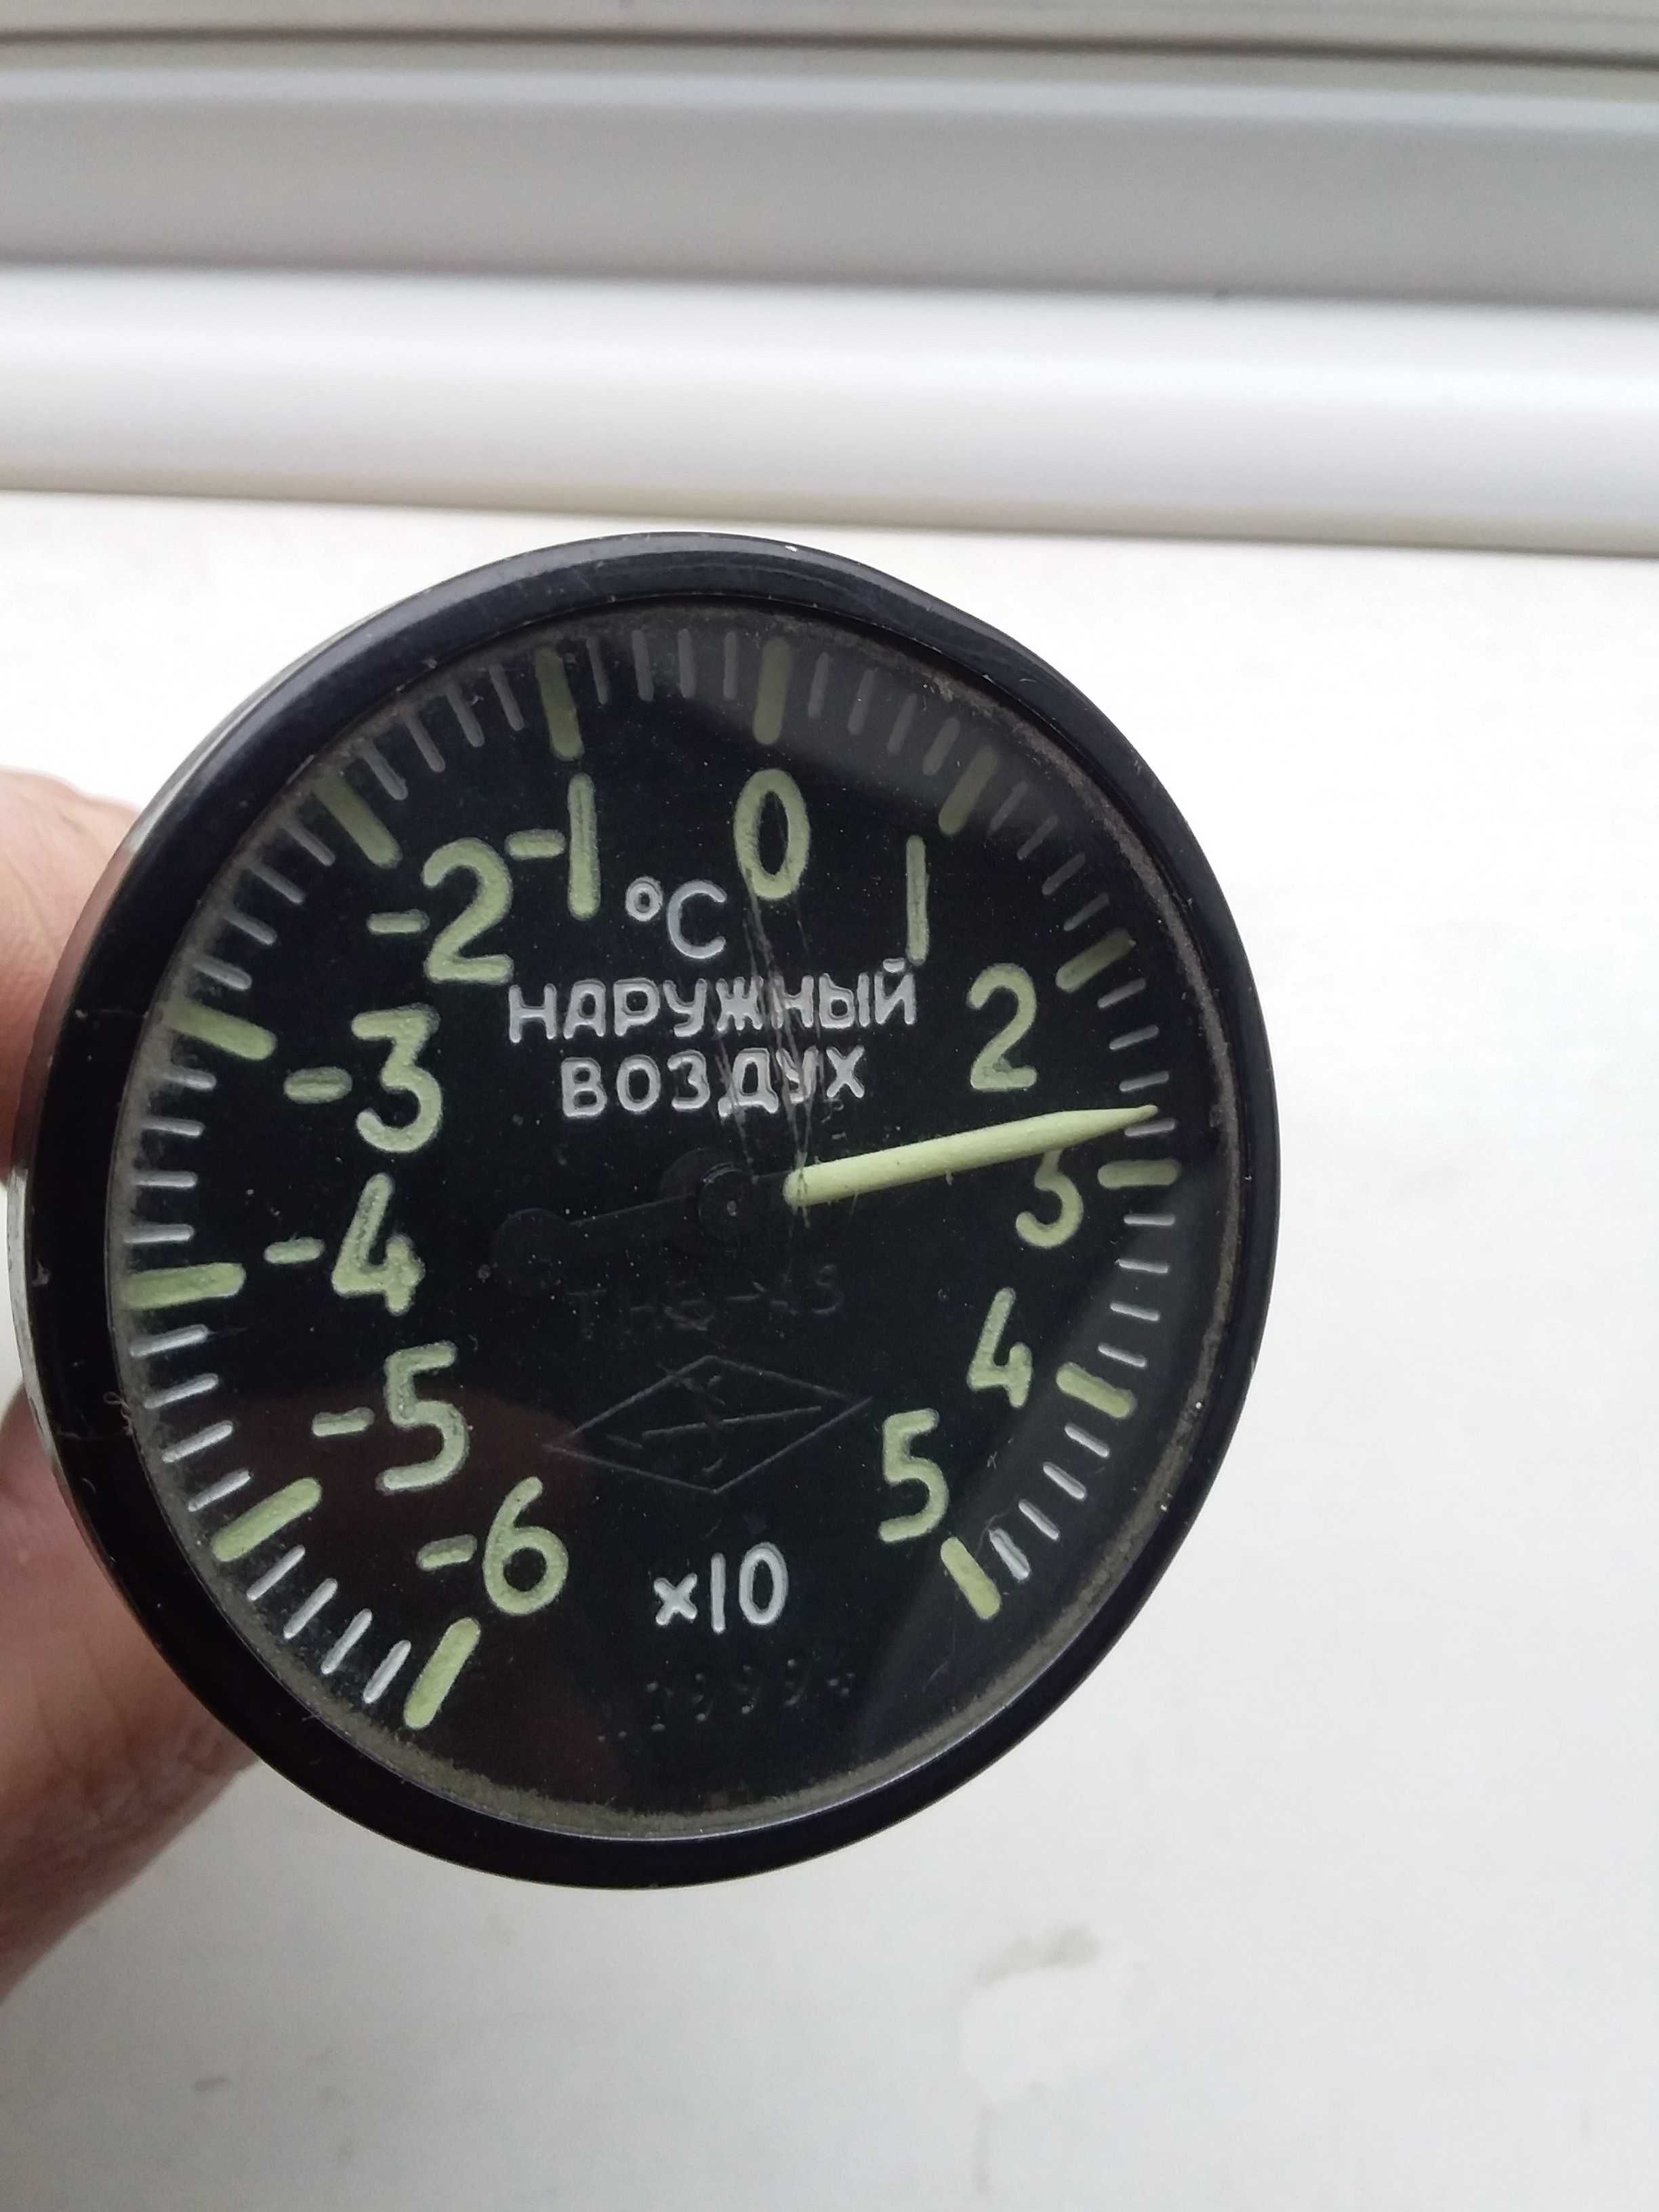 Термометр Авиационный тнв 45